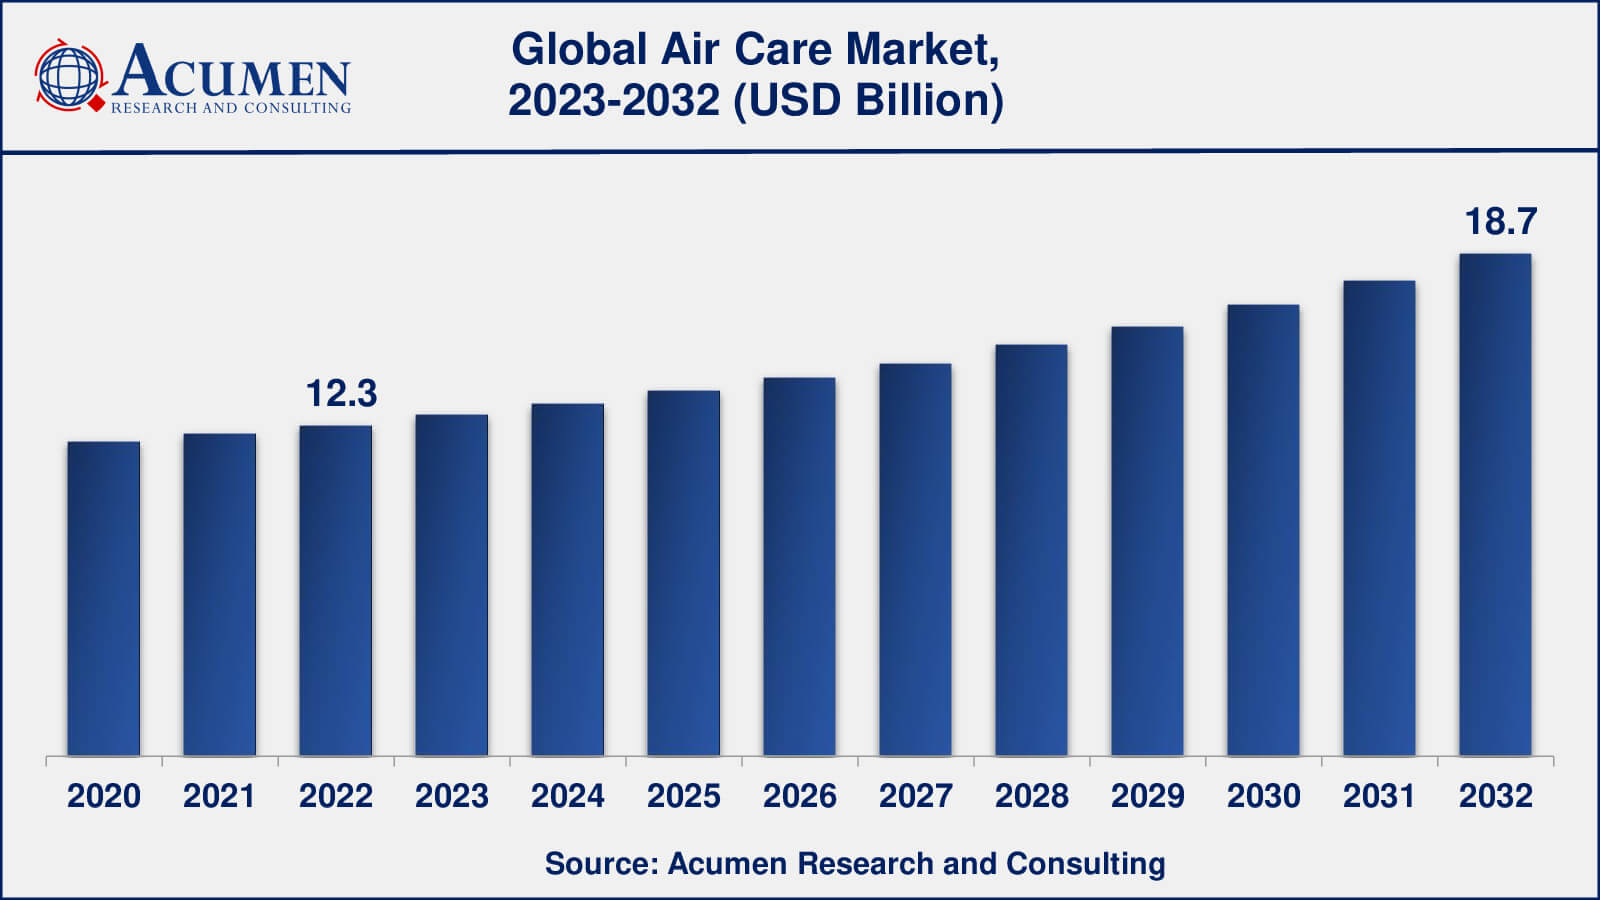 Global Air Care Market Dynamics